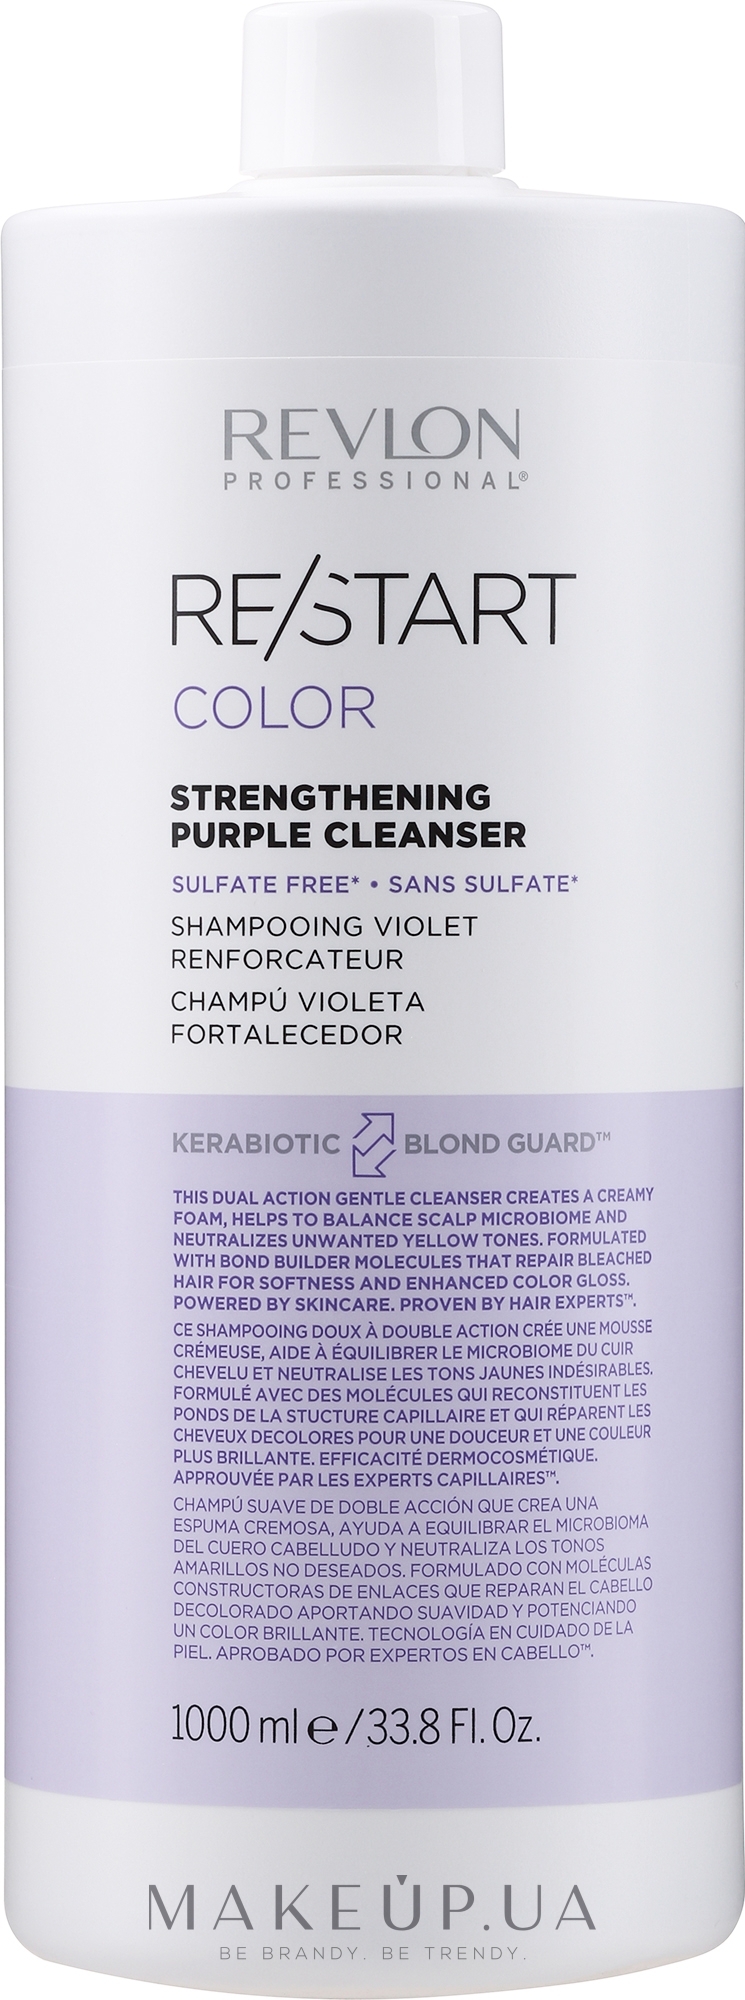 Шампунь для окрашенных волос - Revlon Professional Restart Color Purple Cleanser — фото 1000ml